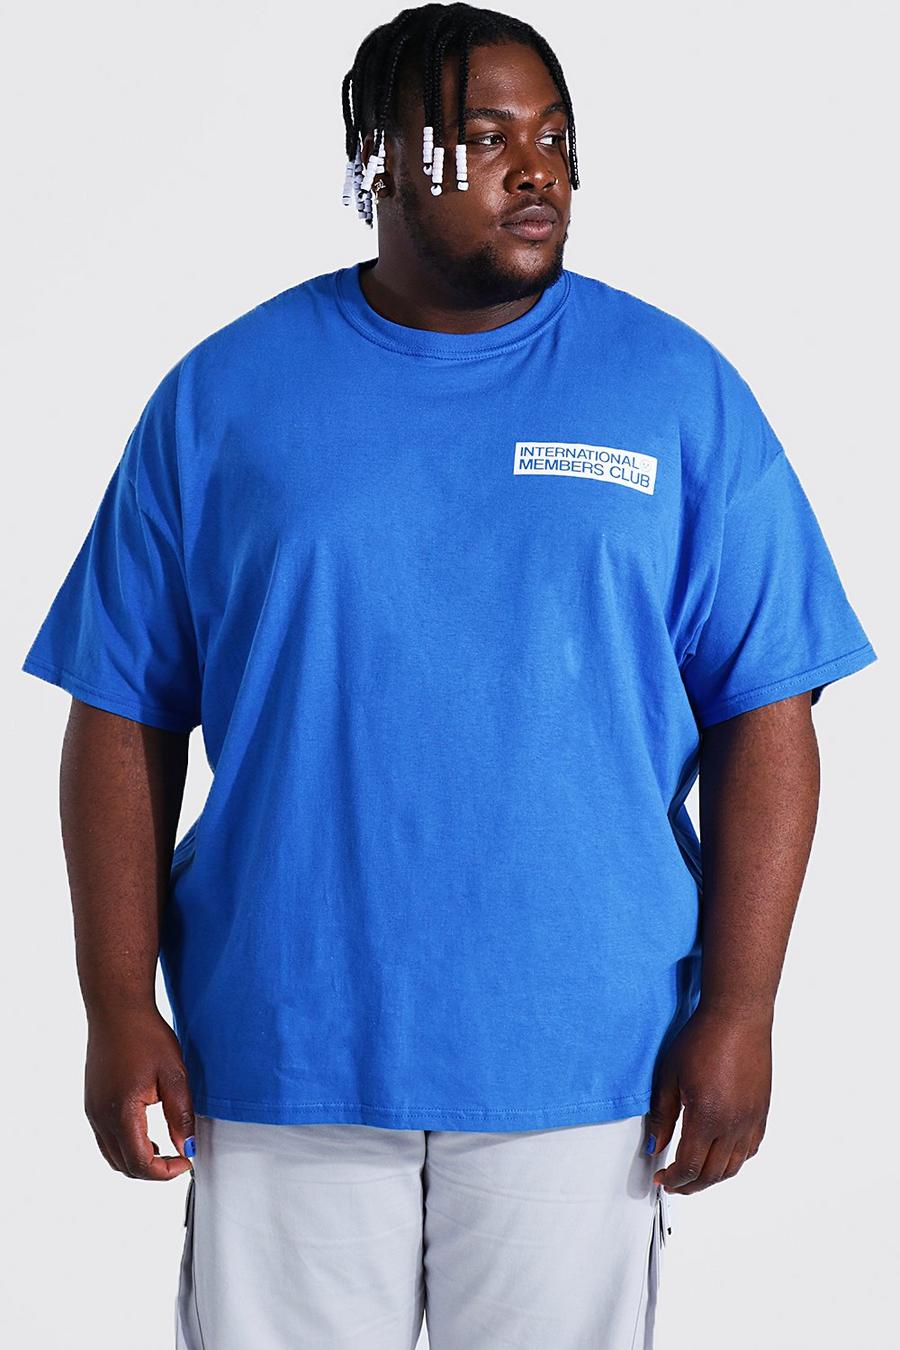 Plus Size T-Shirt mit Members Club Print vorne und hinten, Cobalt blue image number 1